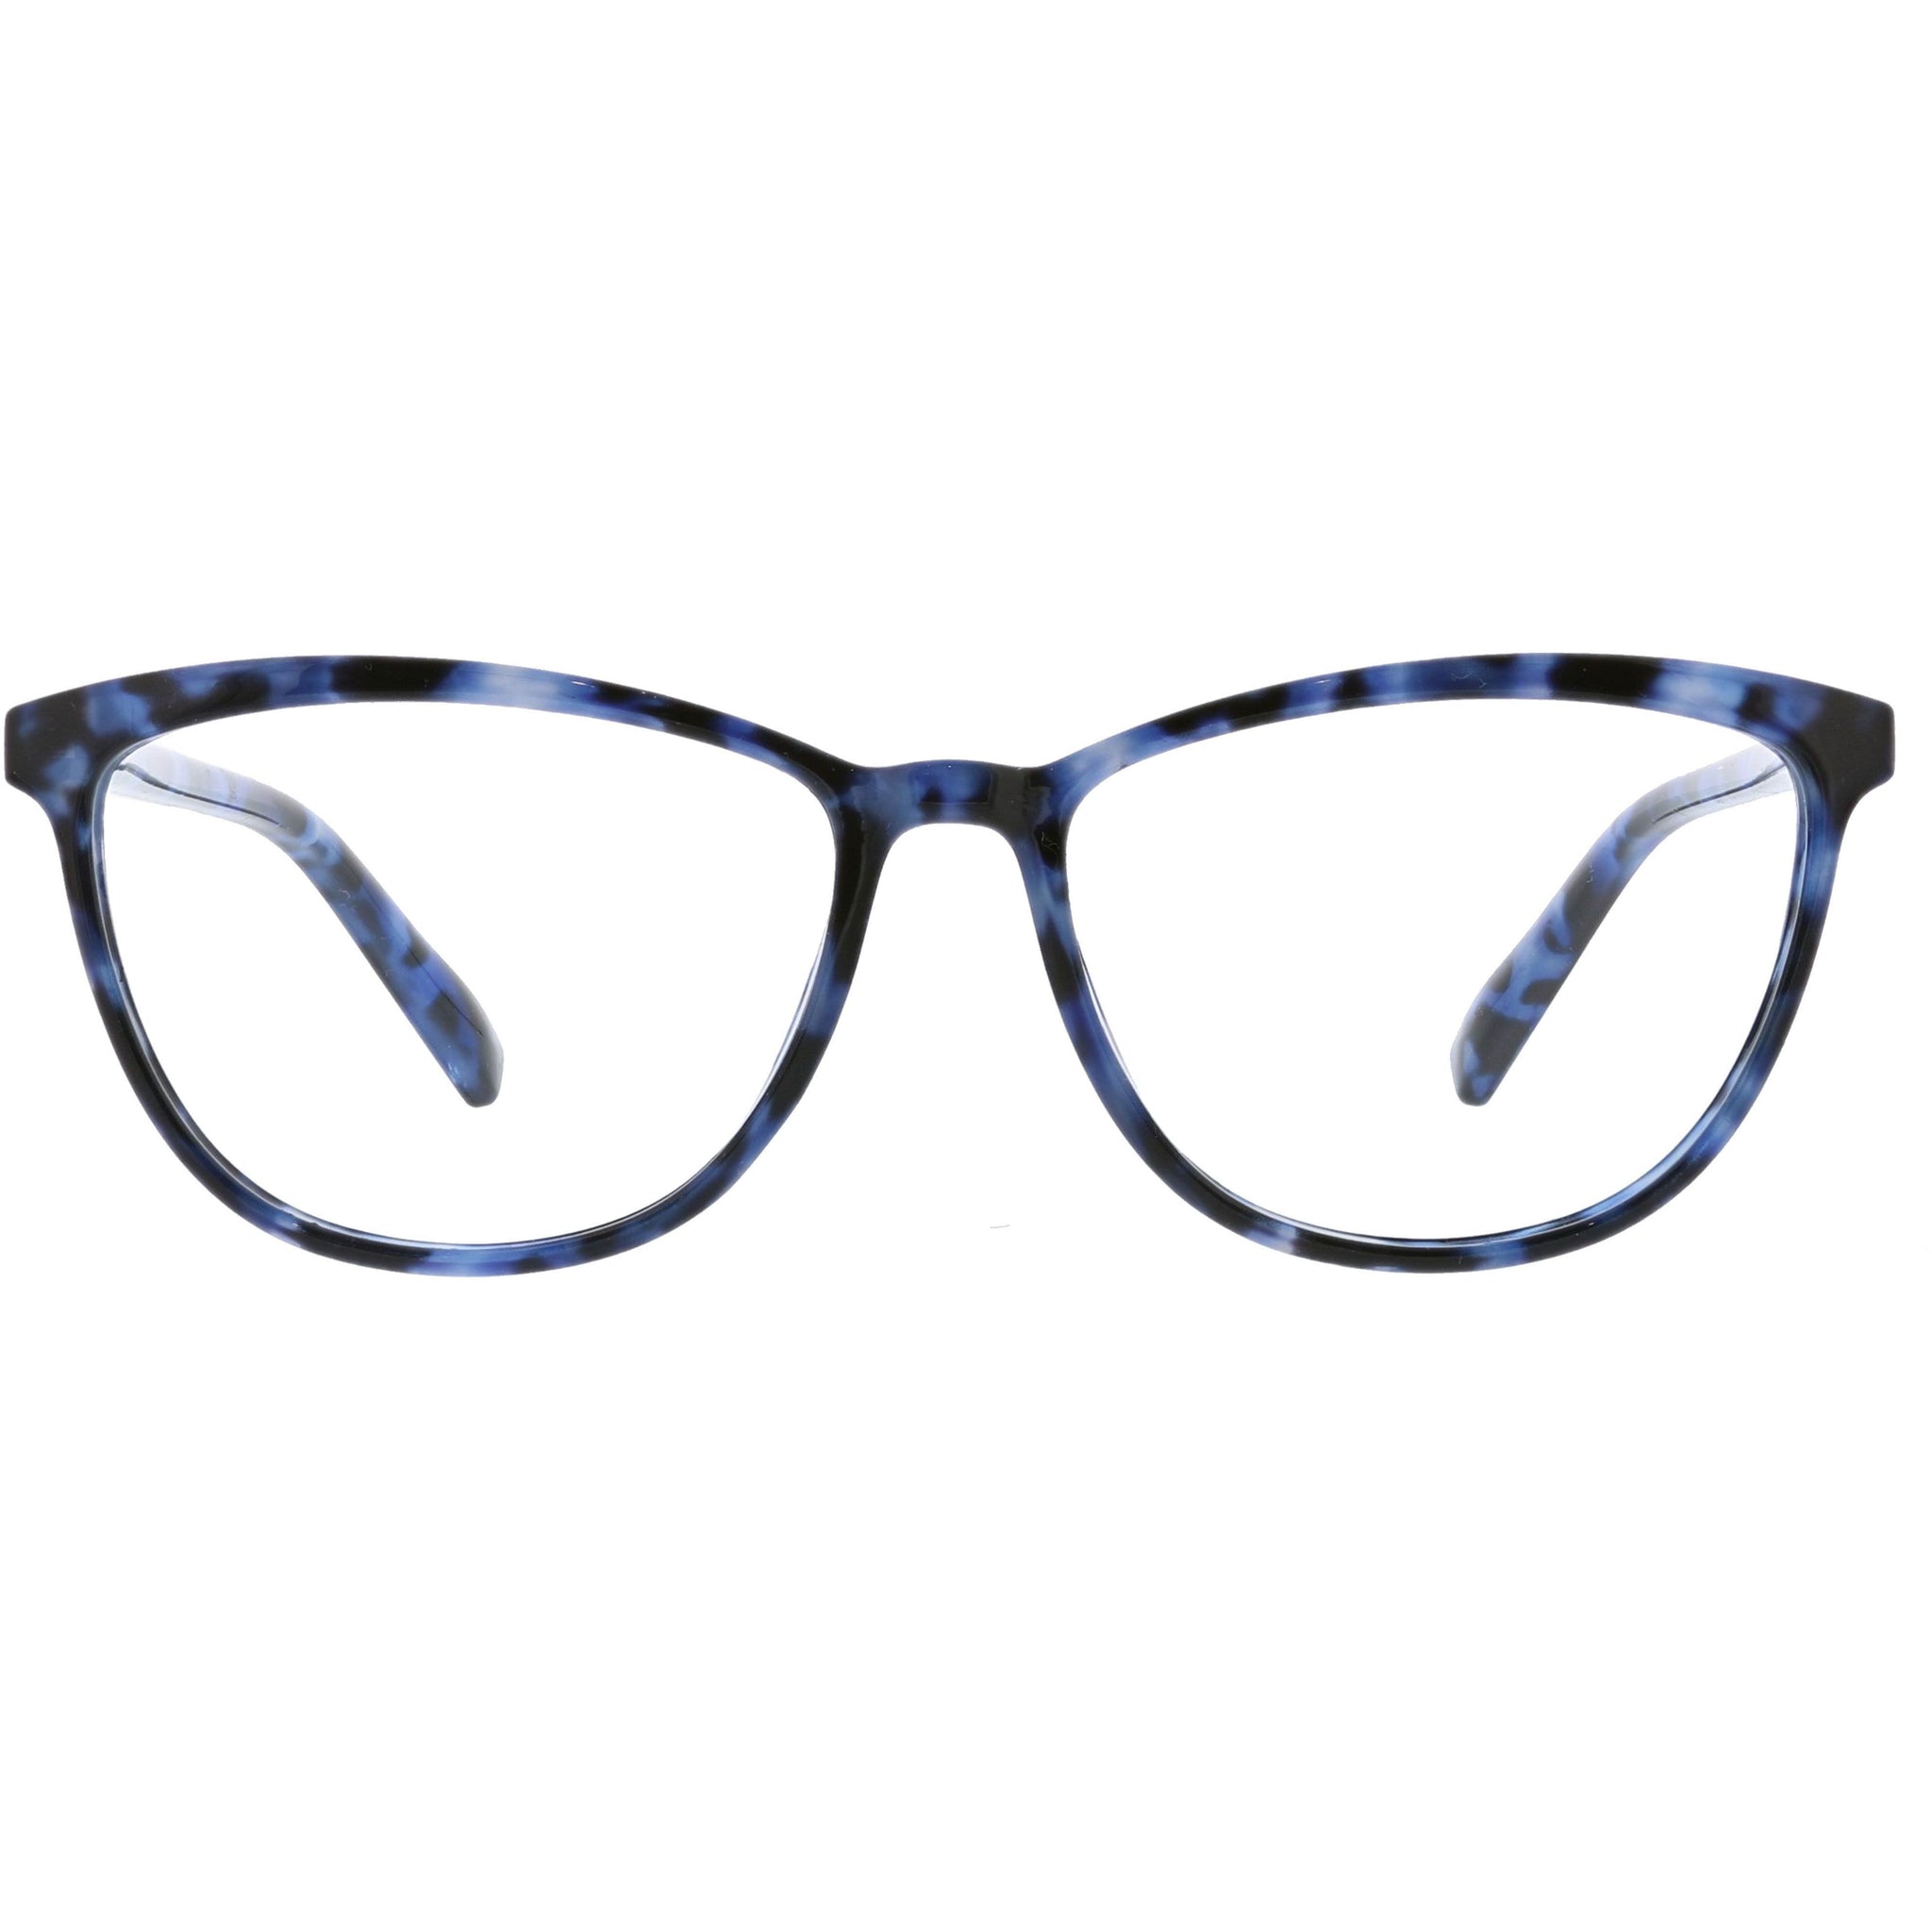 Bengal-Blue Light Glasses